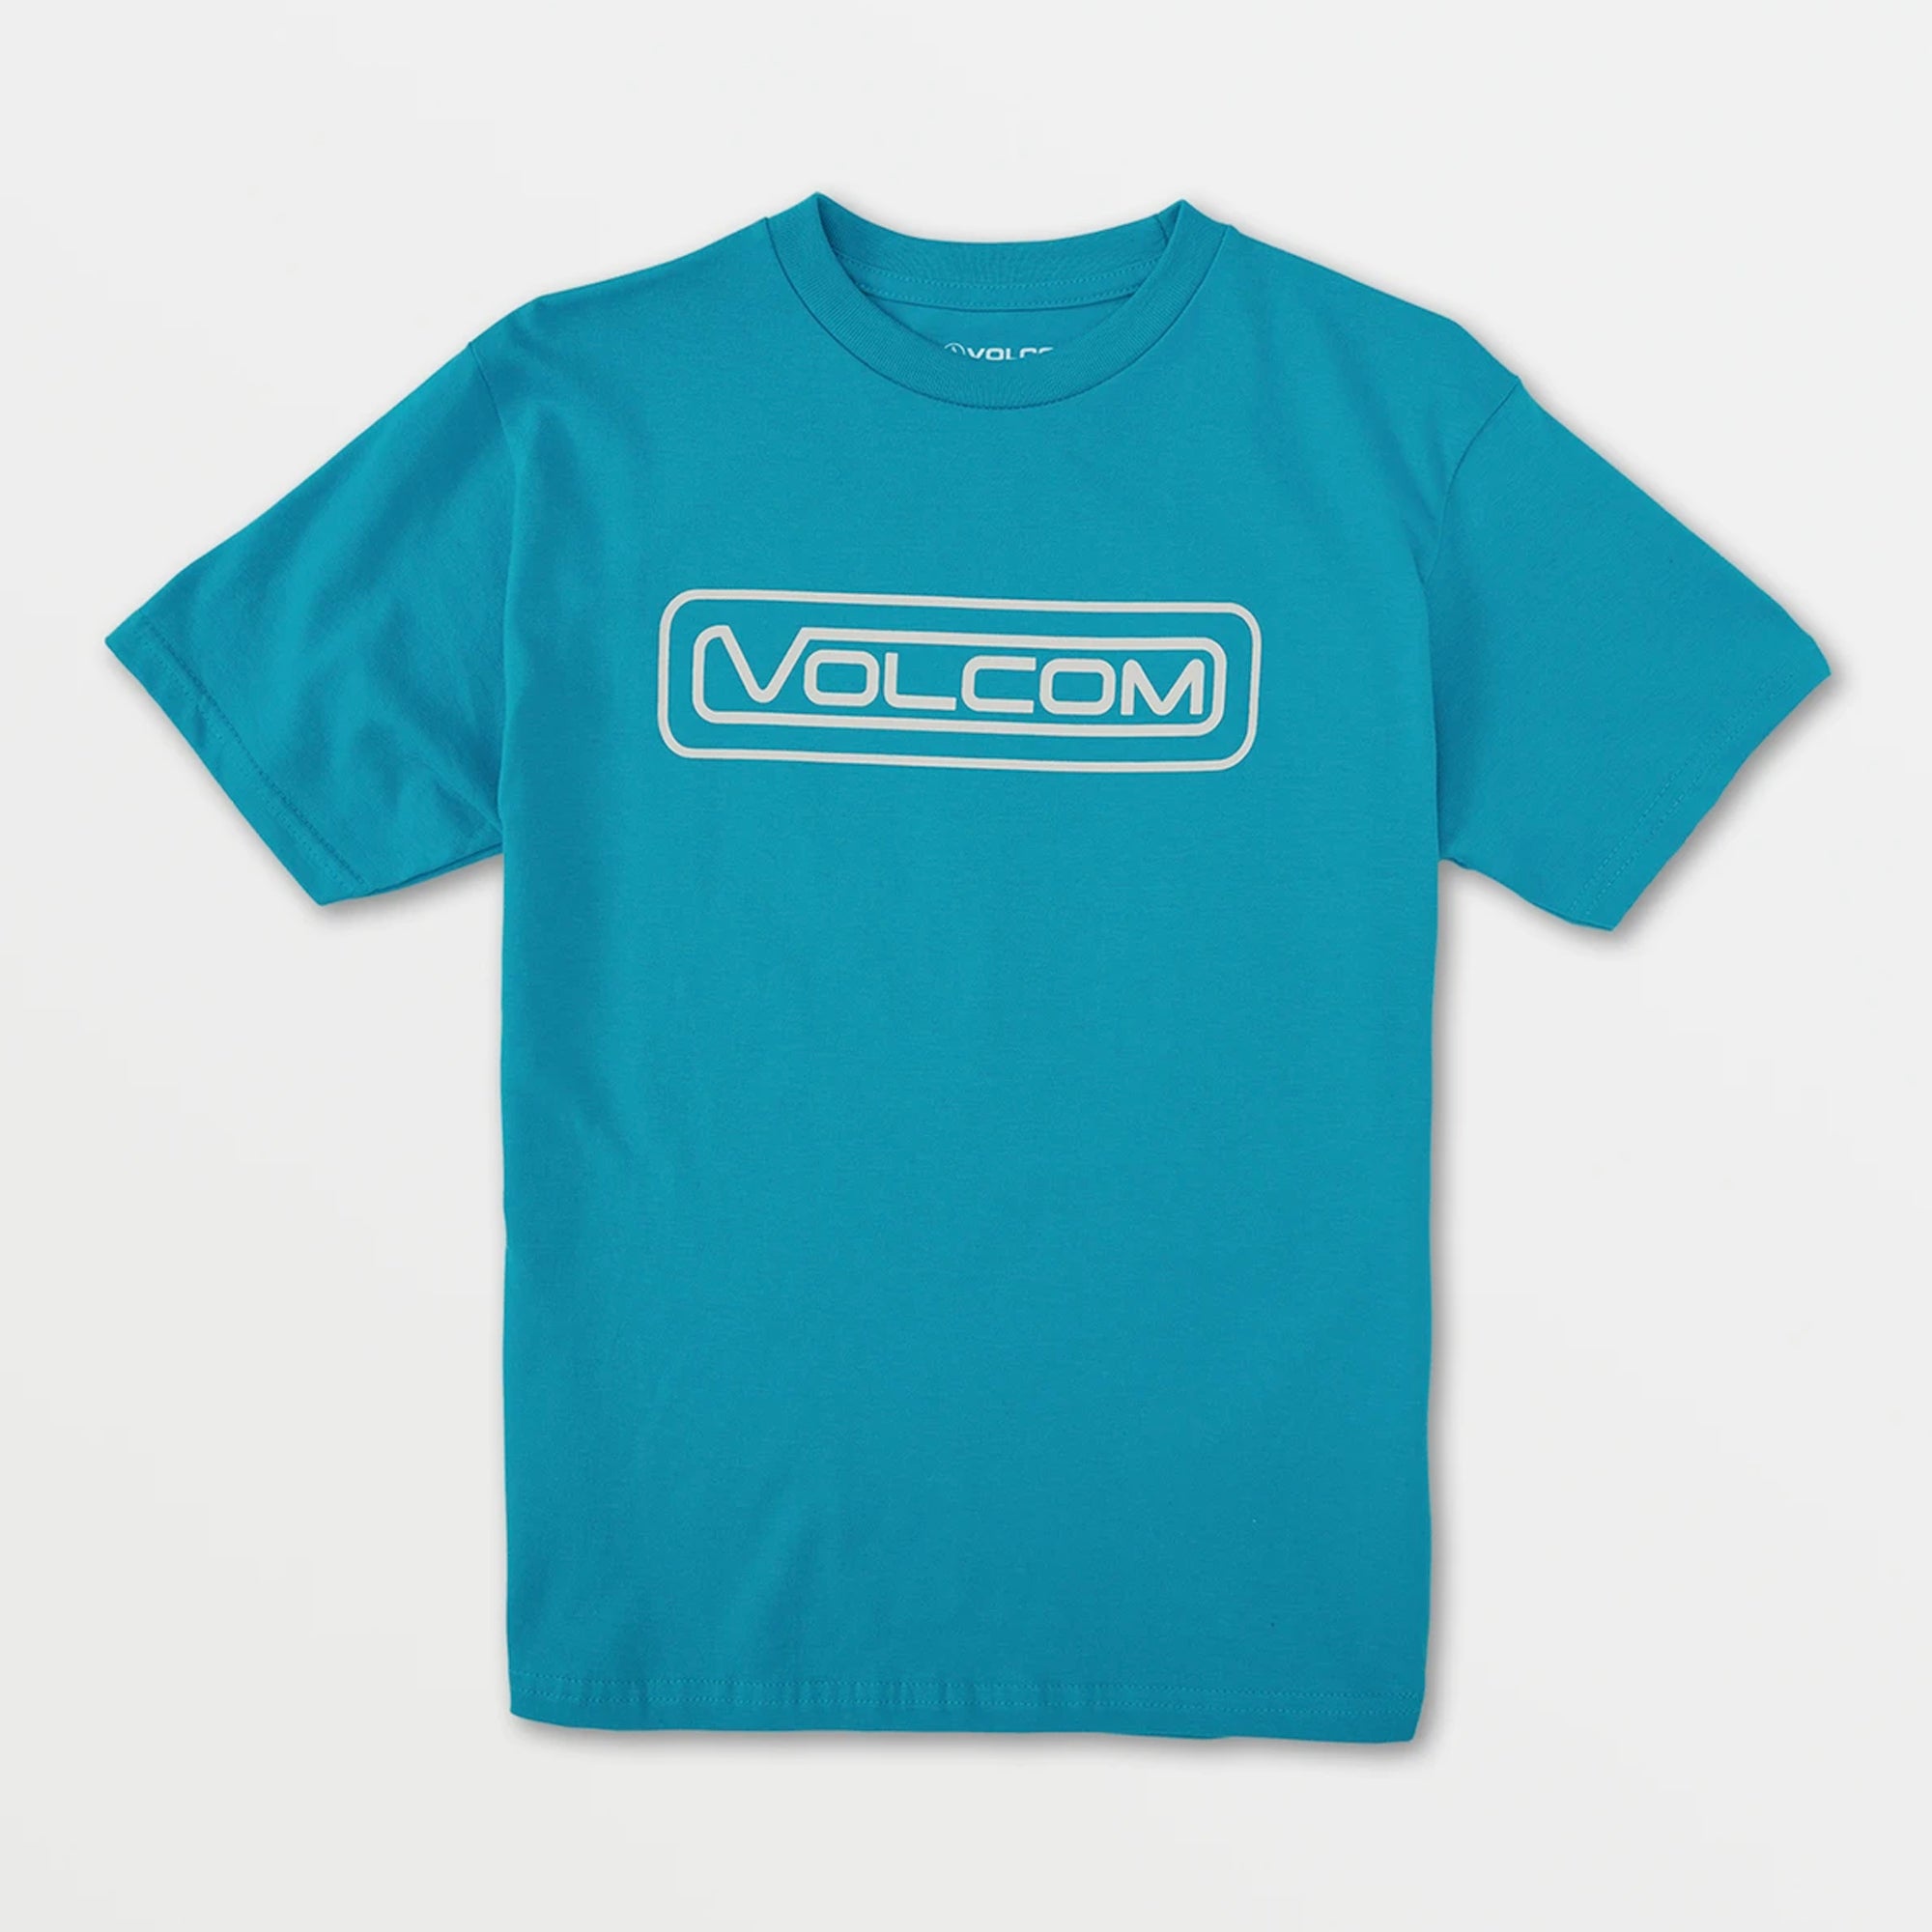 Volcom Stripper S/S Youth Boy's T-Shirt